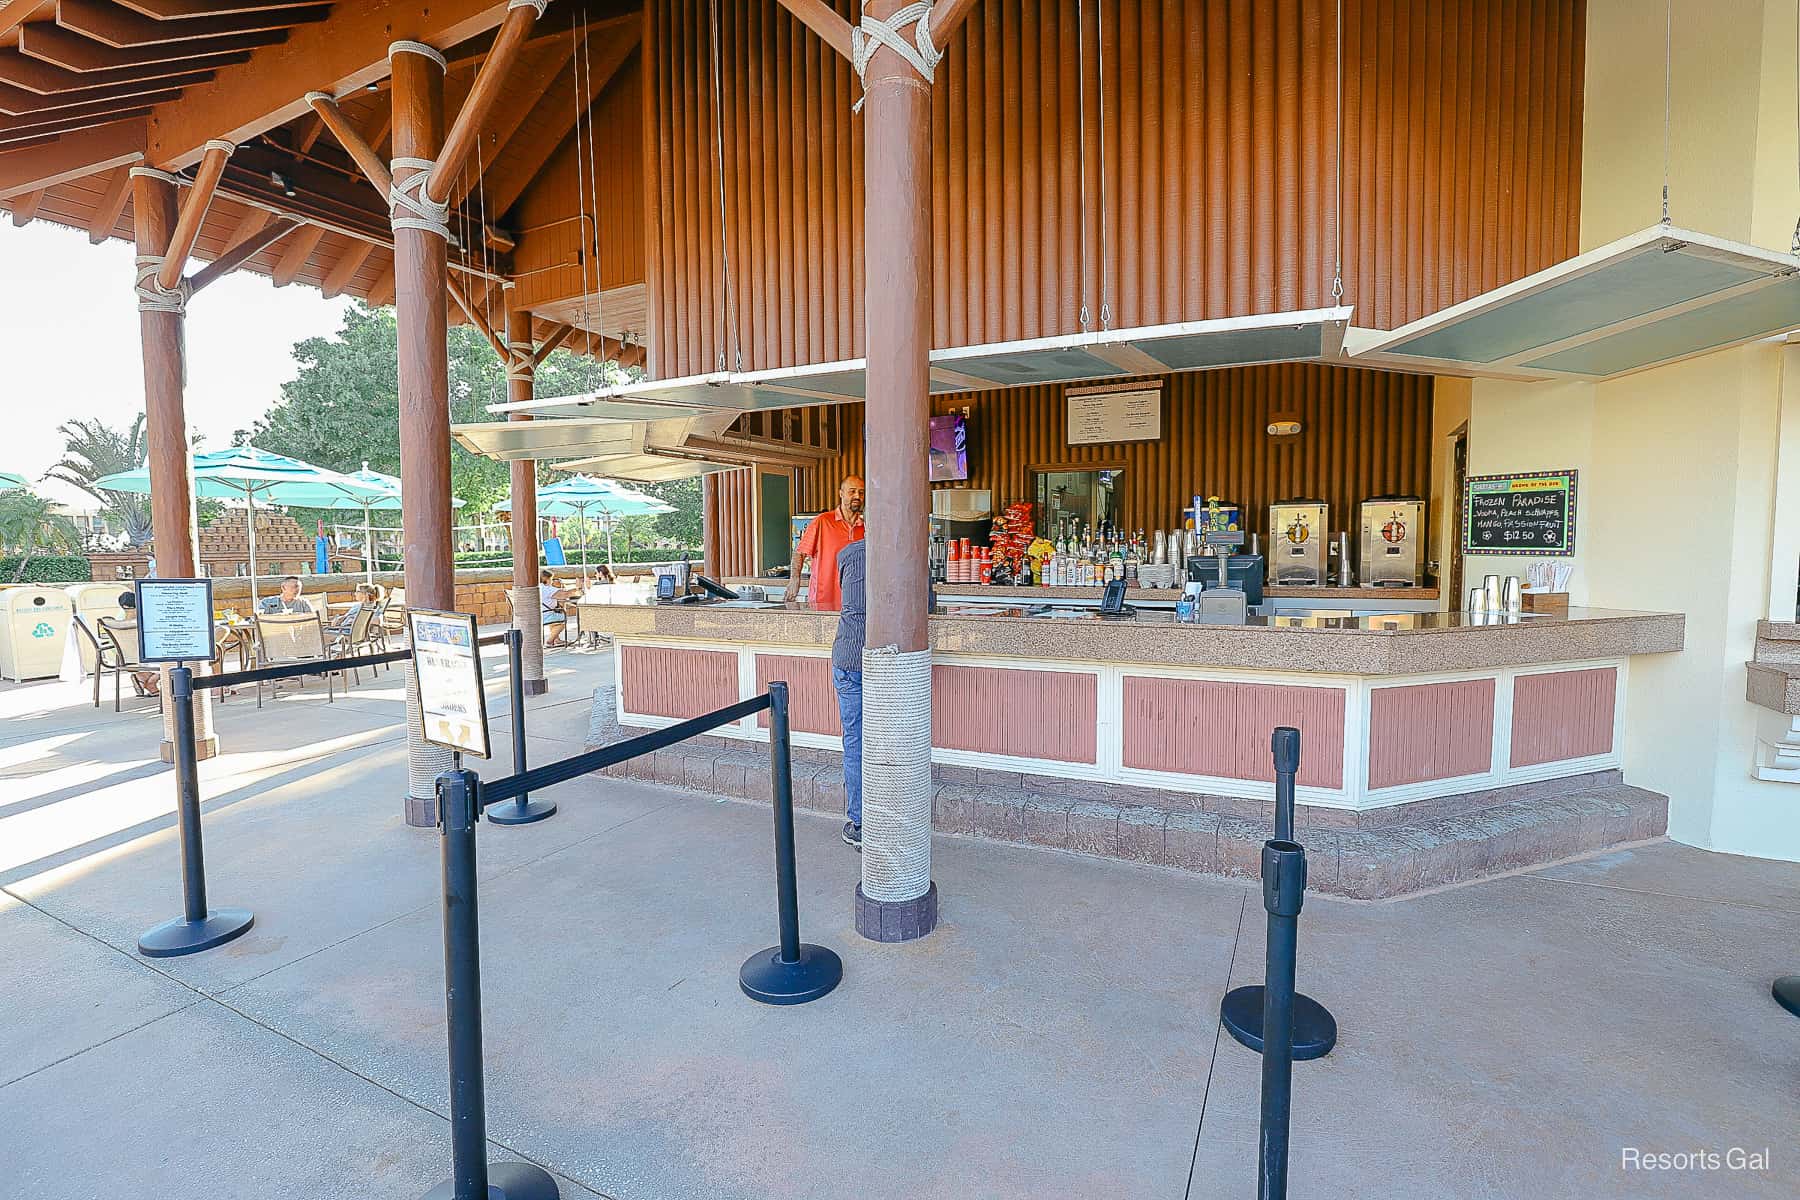 The walk-up counter for the pool bar at Coronado Springs 